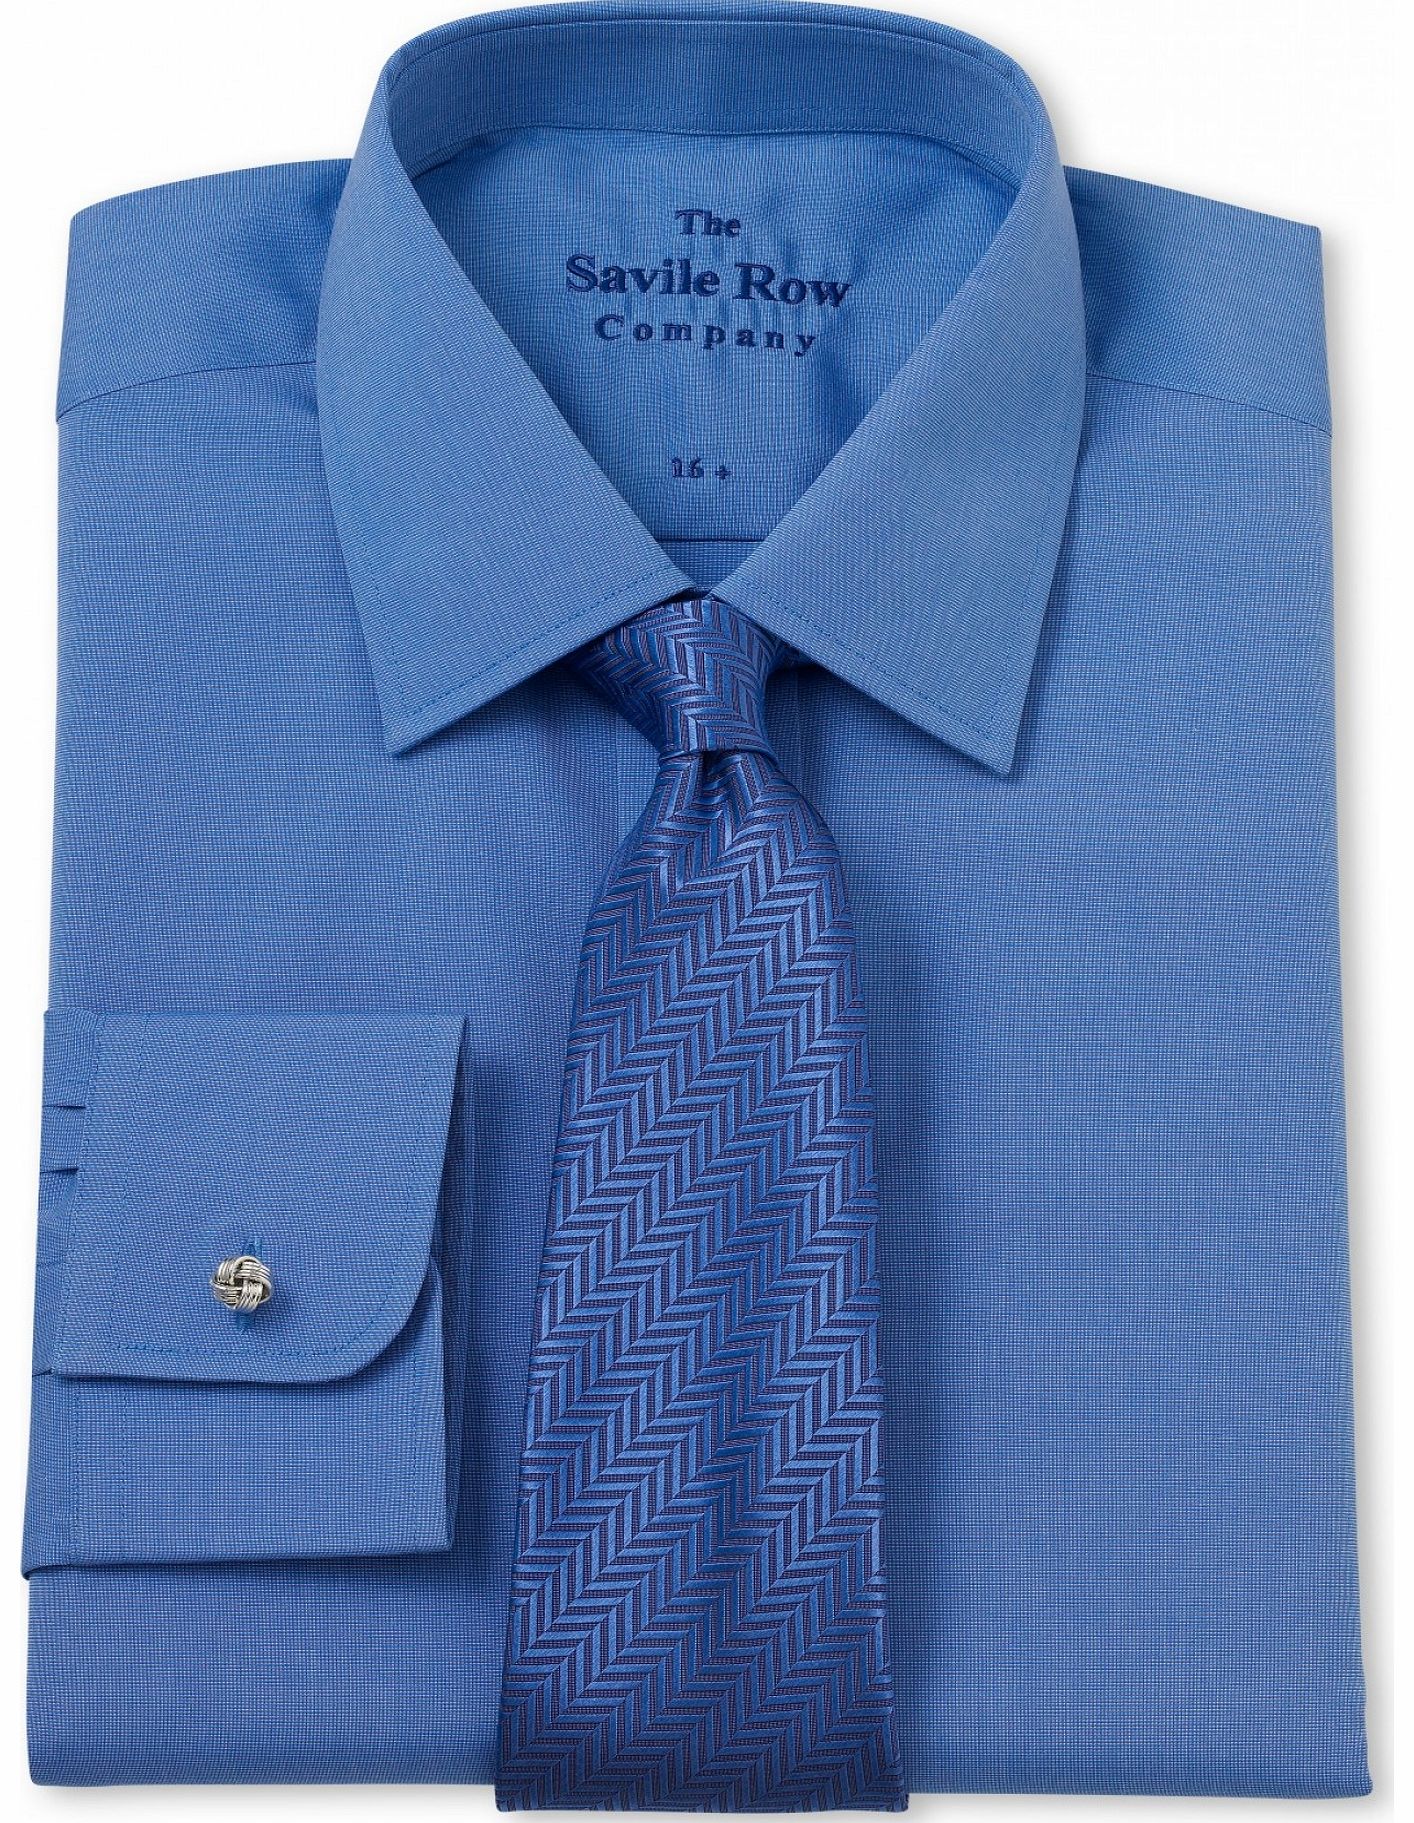 Savile Row Company Blue End on End Slim Fit Shirt 17`` Lengthened